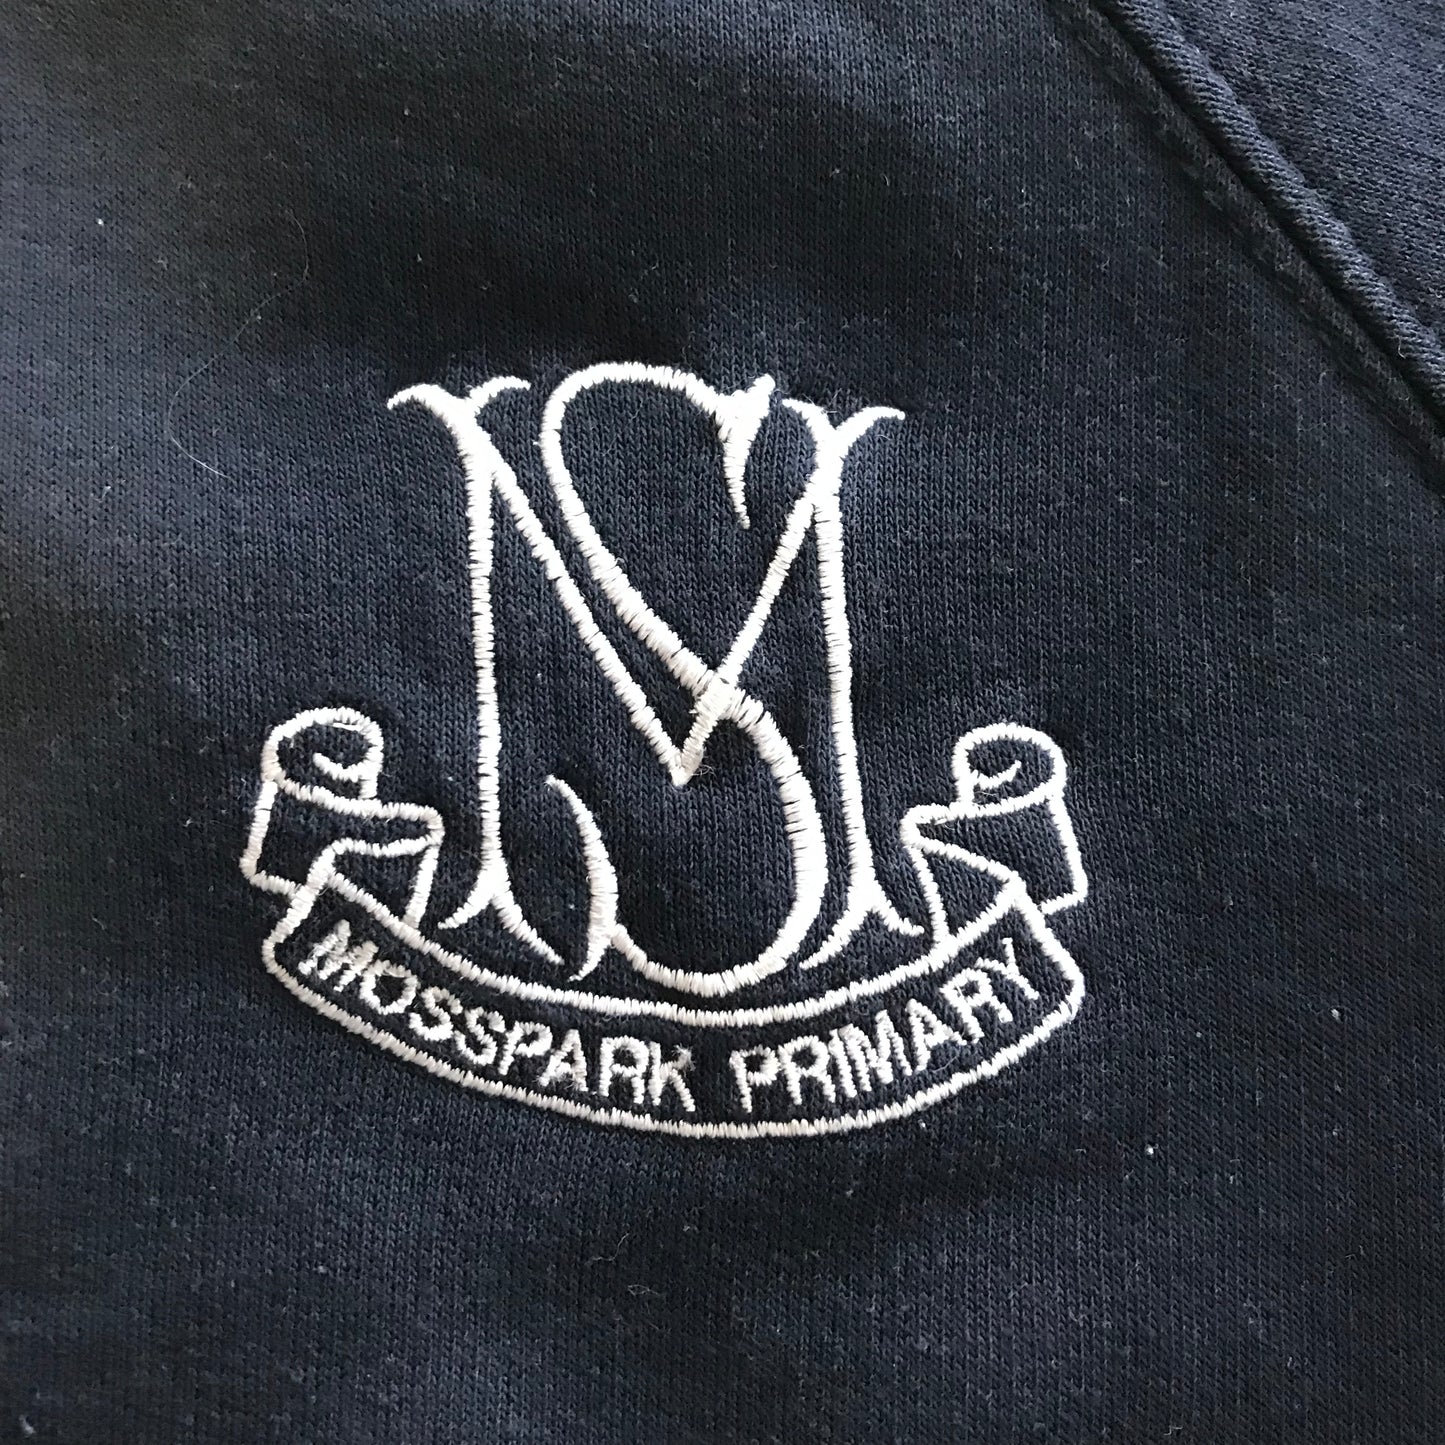 Mosspark Primary Navy Blue Sweatshirt Crewneck